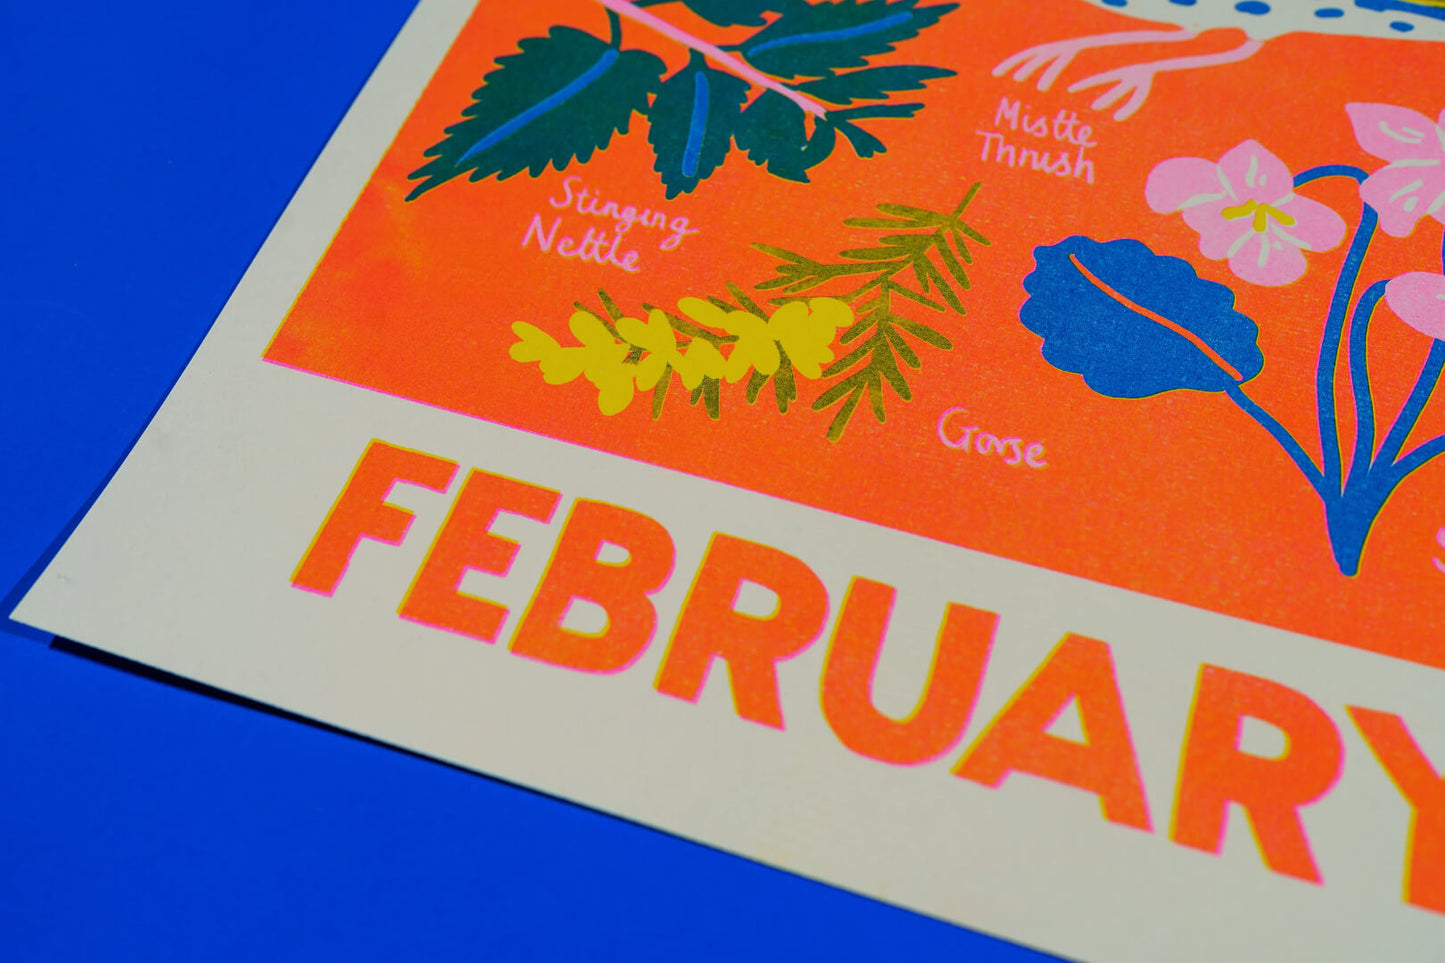 February Foraging Riso Print